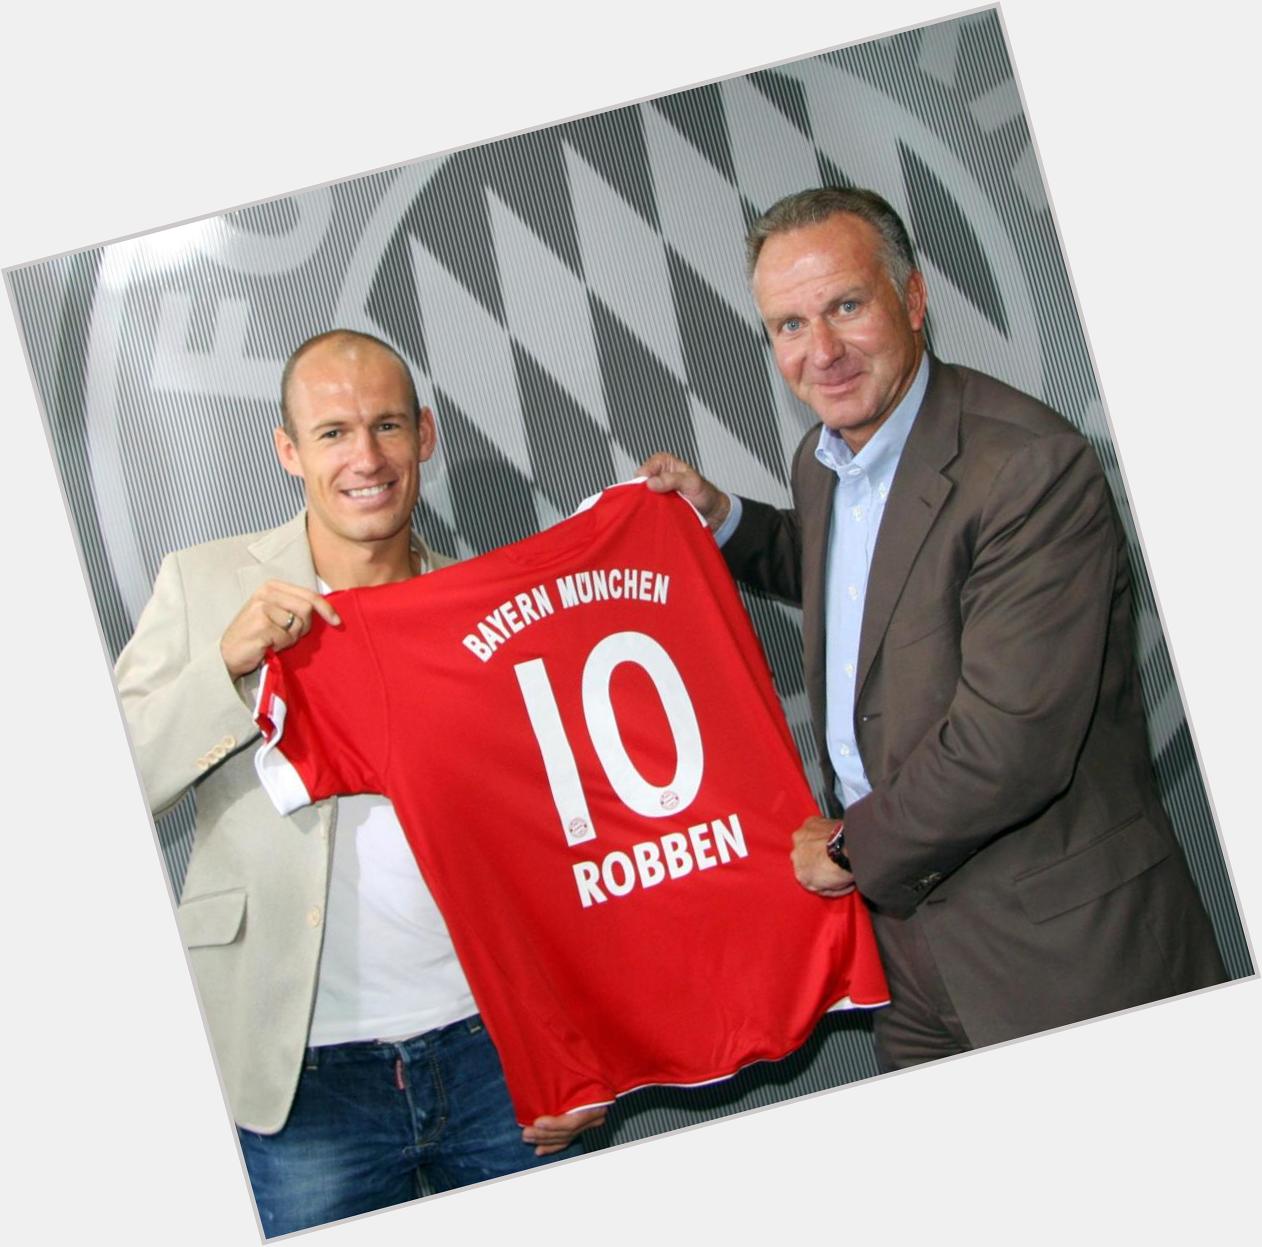 276 Games
134 Goals 
91 Assists 
17 Trophies
One Bayern legend

- Happy 34th birthday Arjen Robben! 